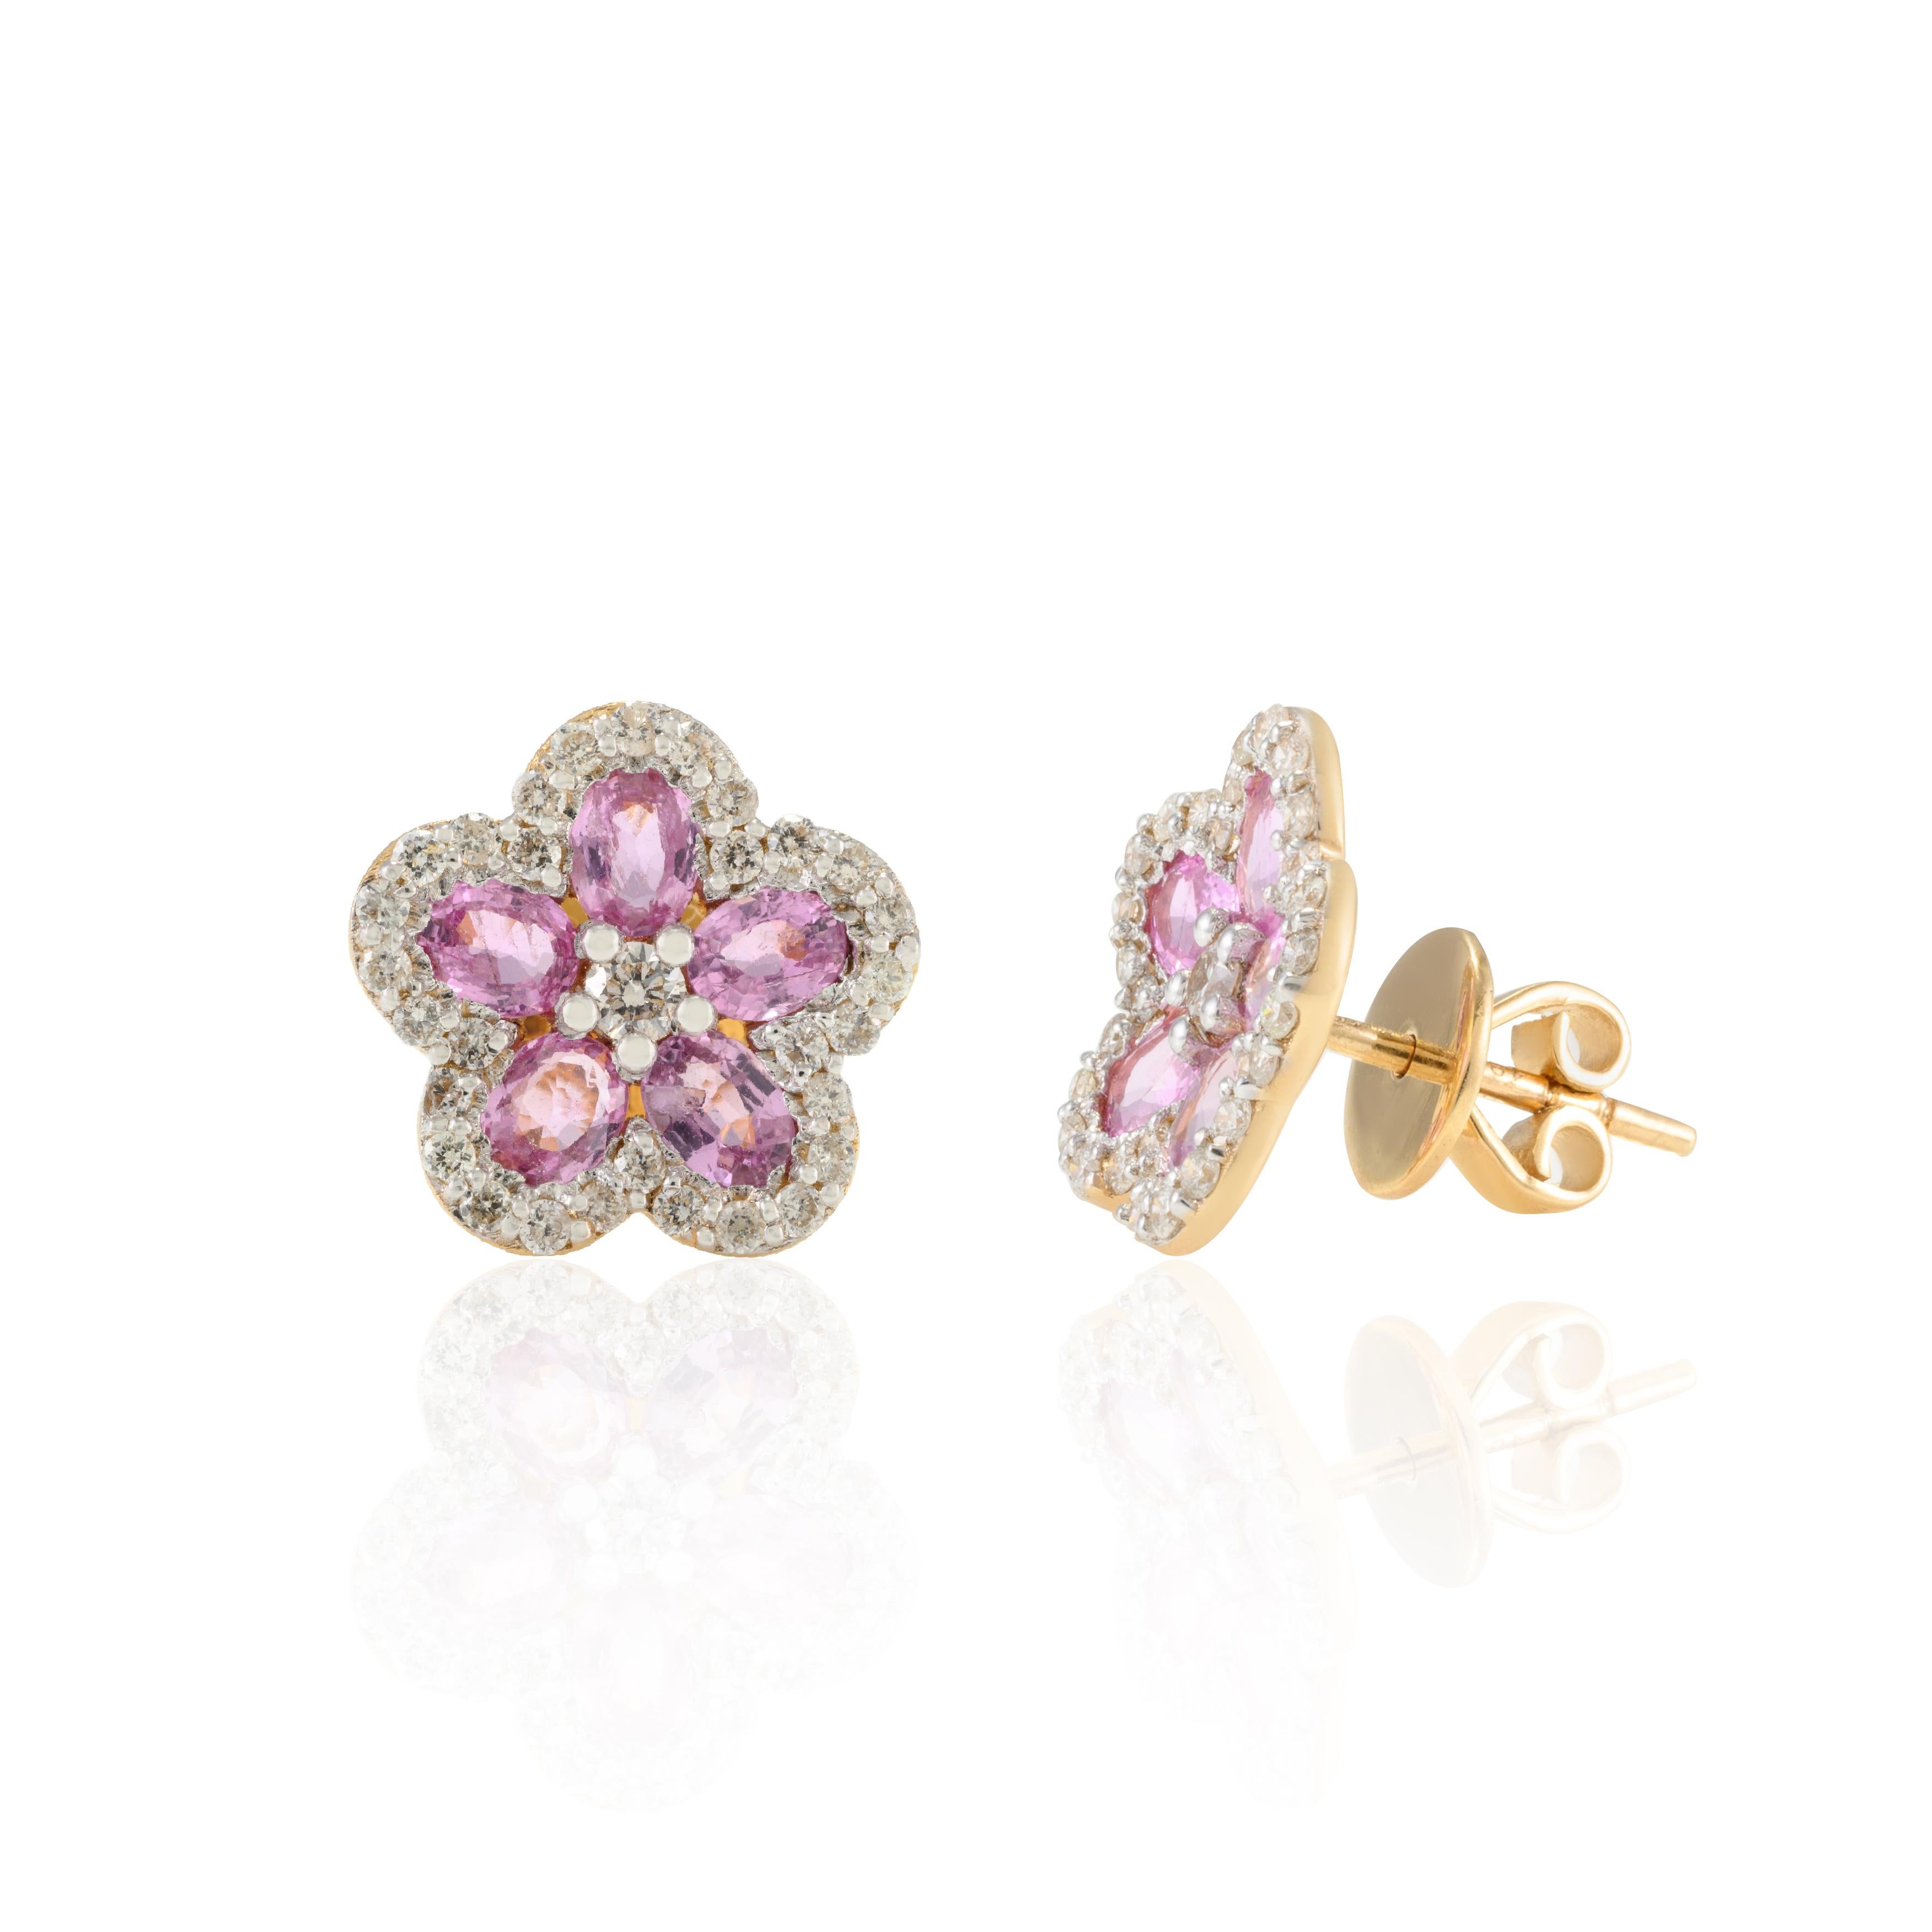 Oval Cut Cherry Blossom Pink Sapphire Diamond Flower Stud Earrings in 18k Yellow Gold